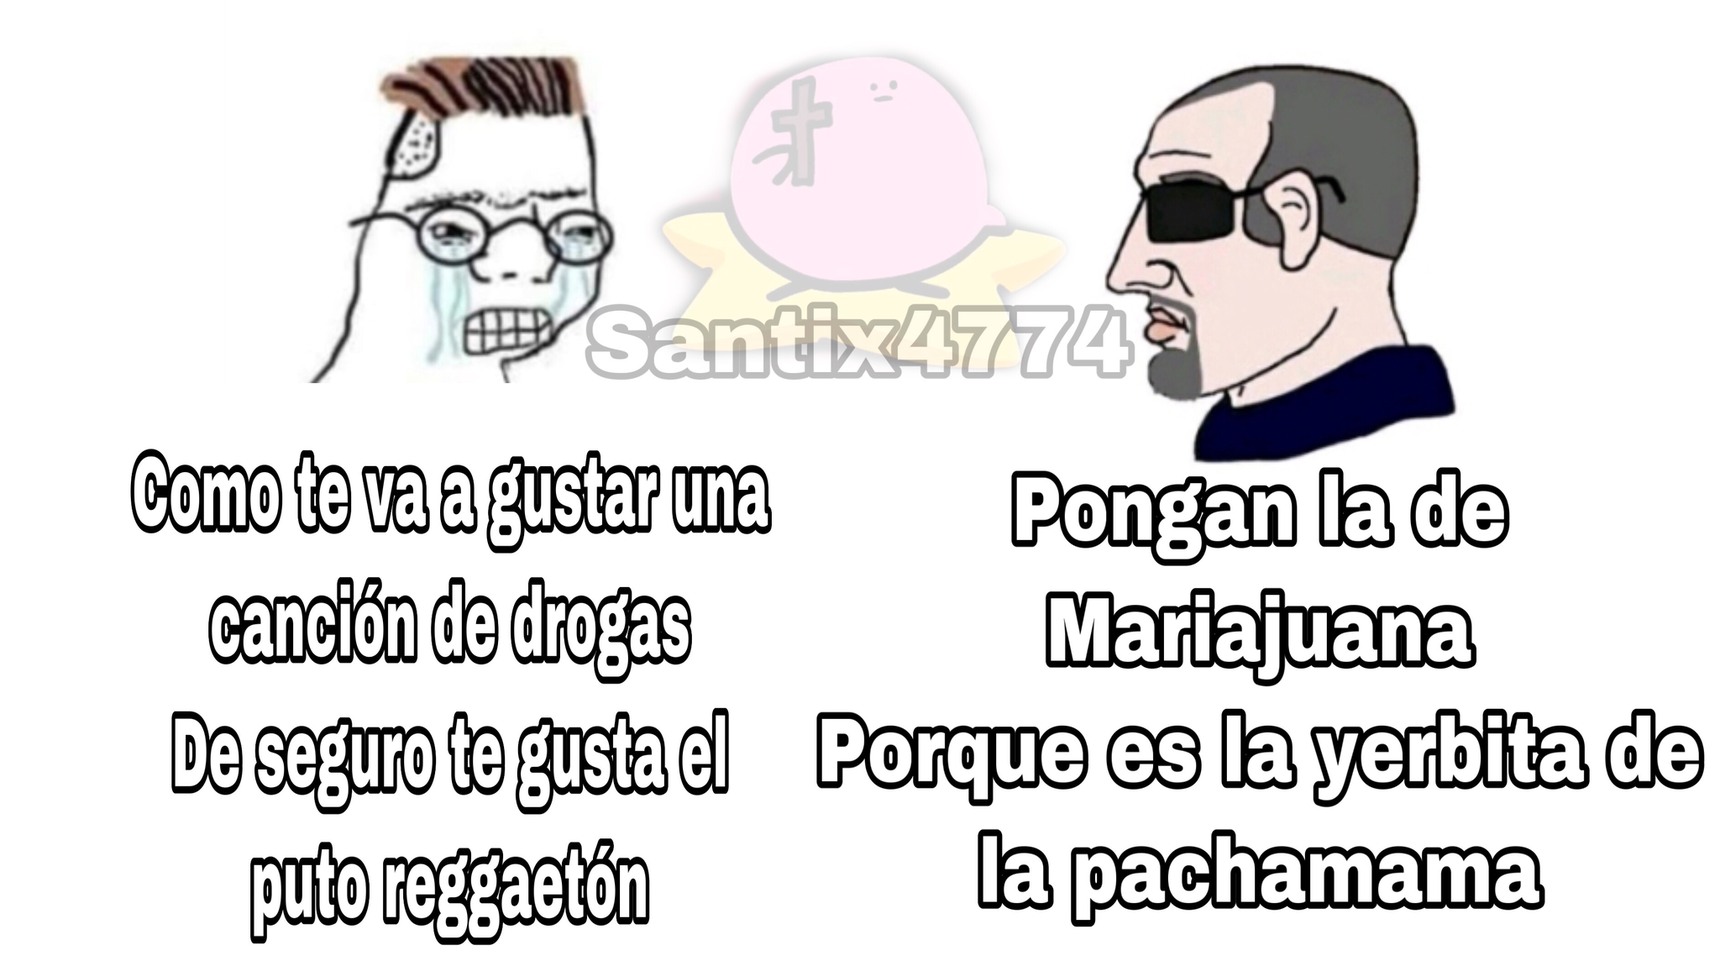 Mariajuana - meme